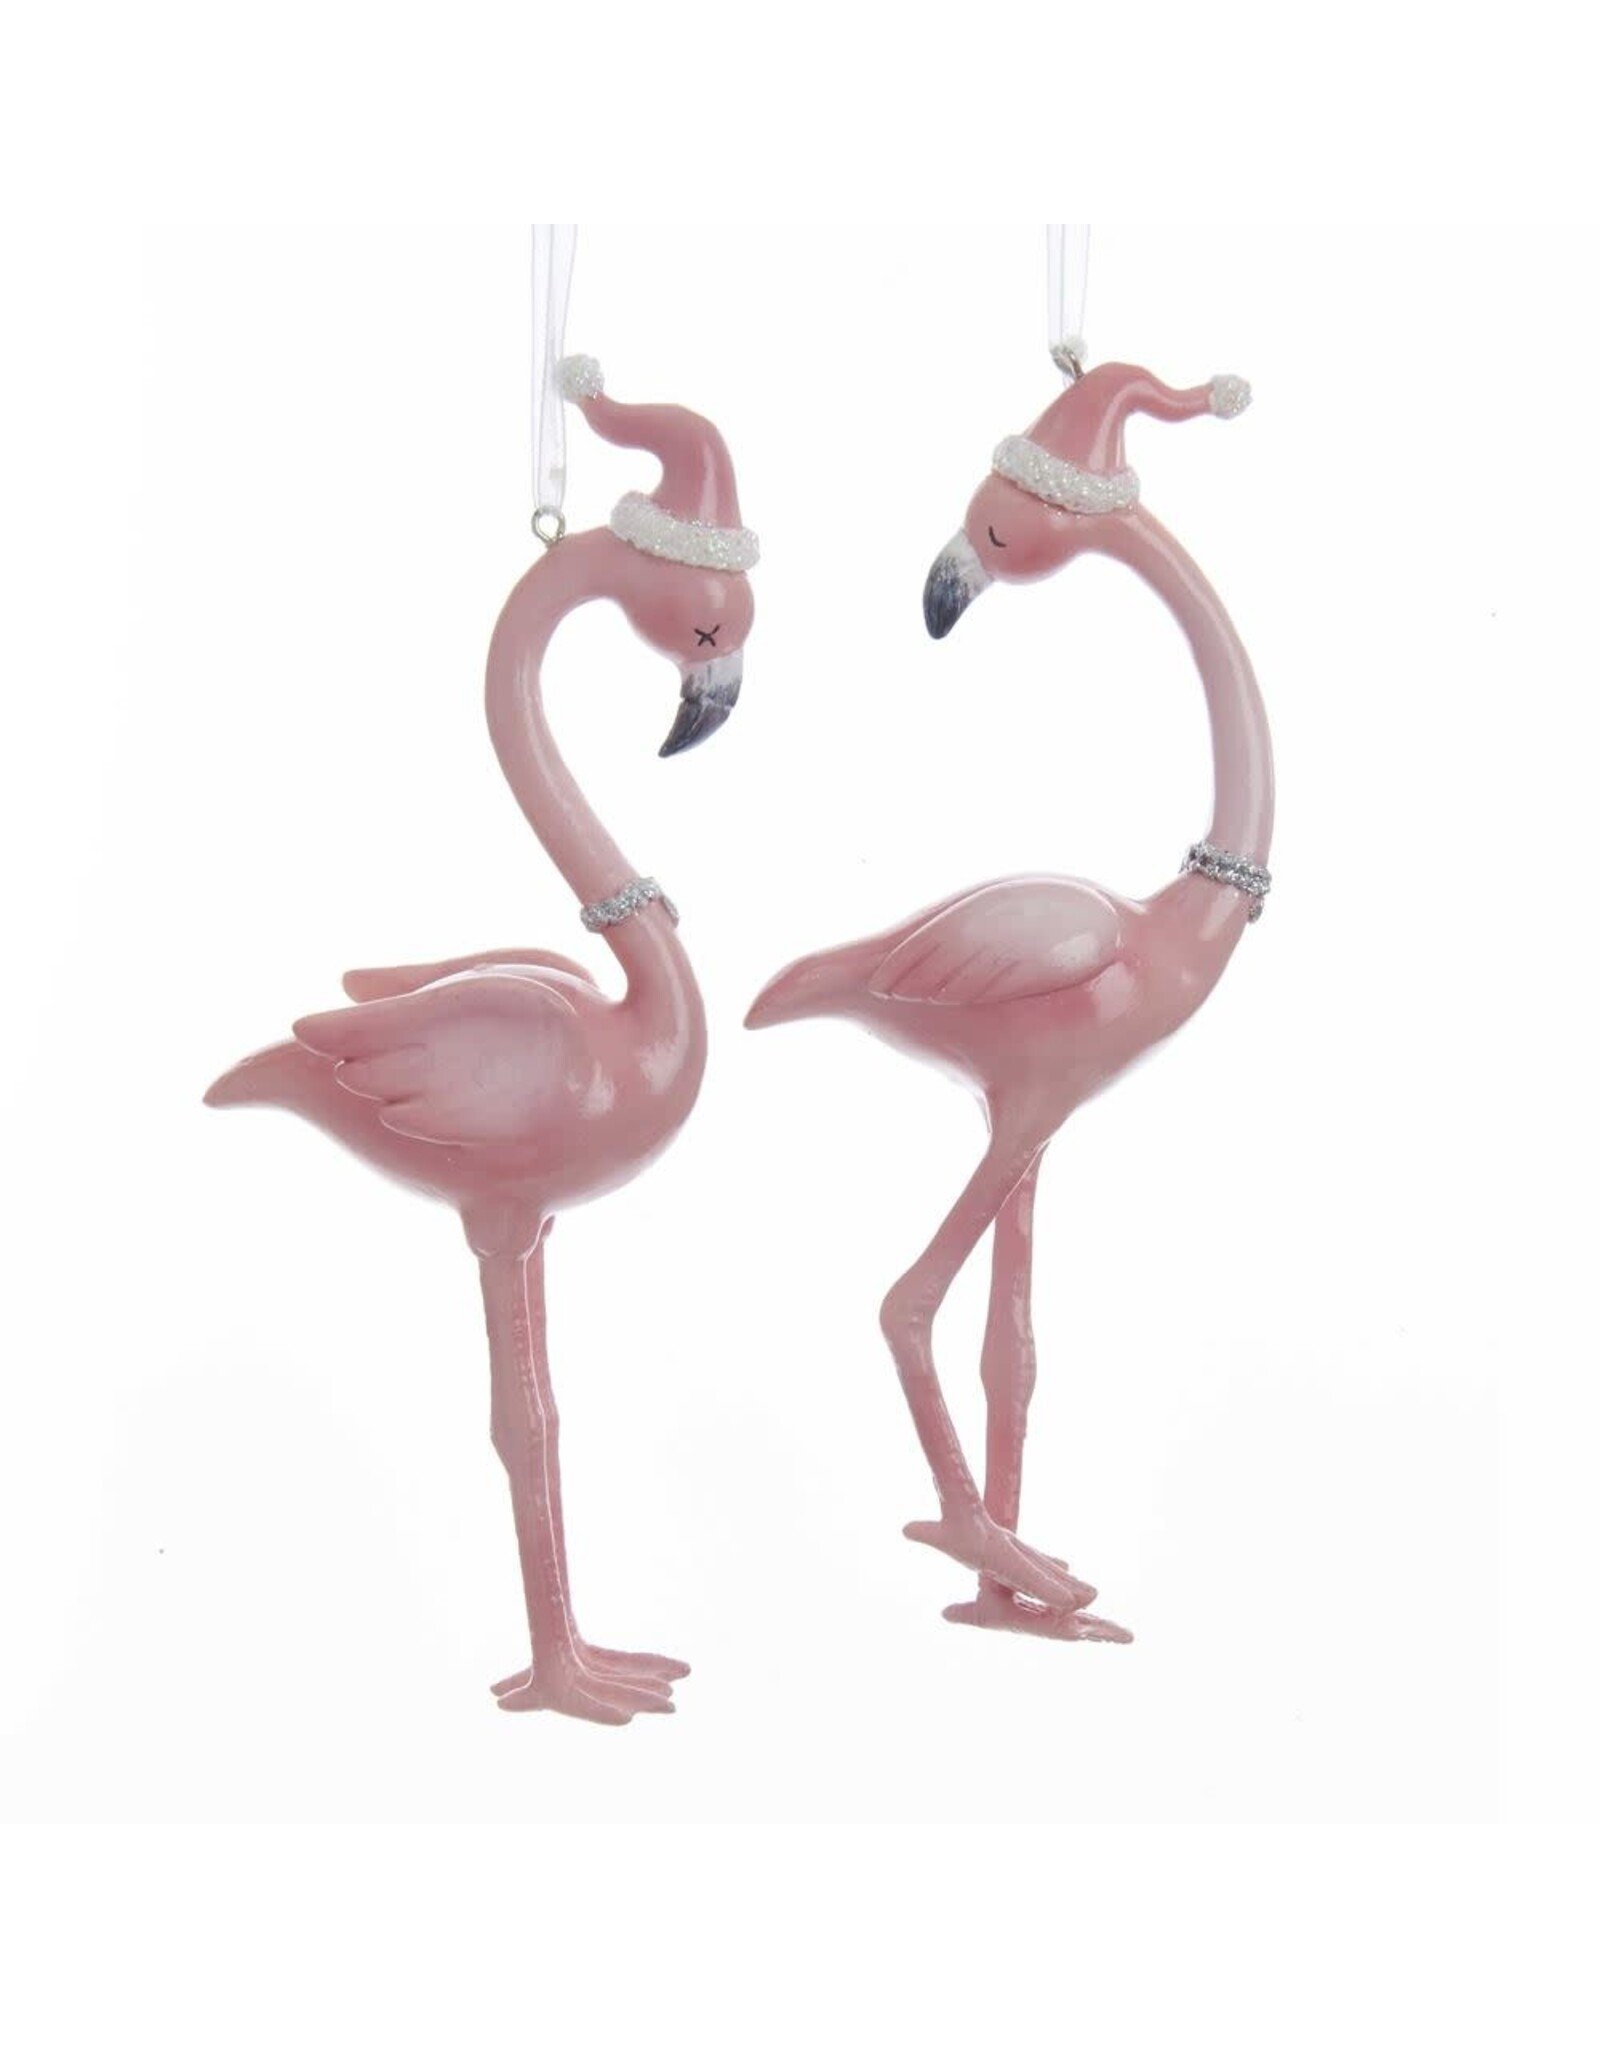 Kurt Adler Pink Flamingo Ornaments In Santa Hat Set of 2 Assorted